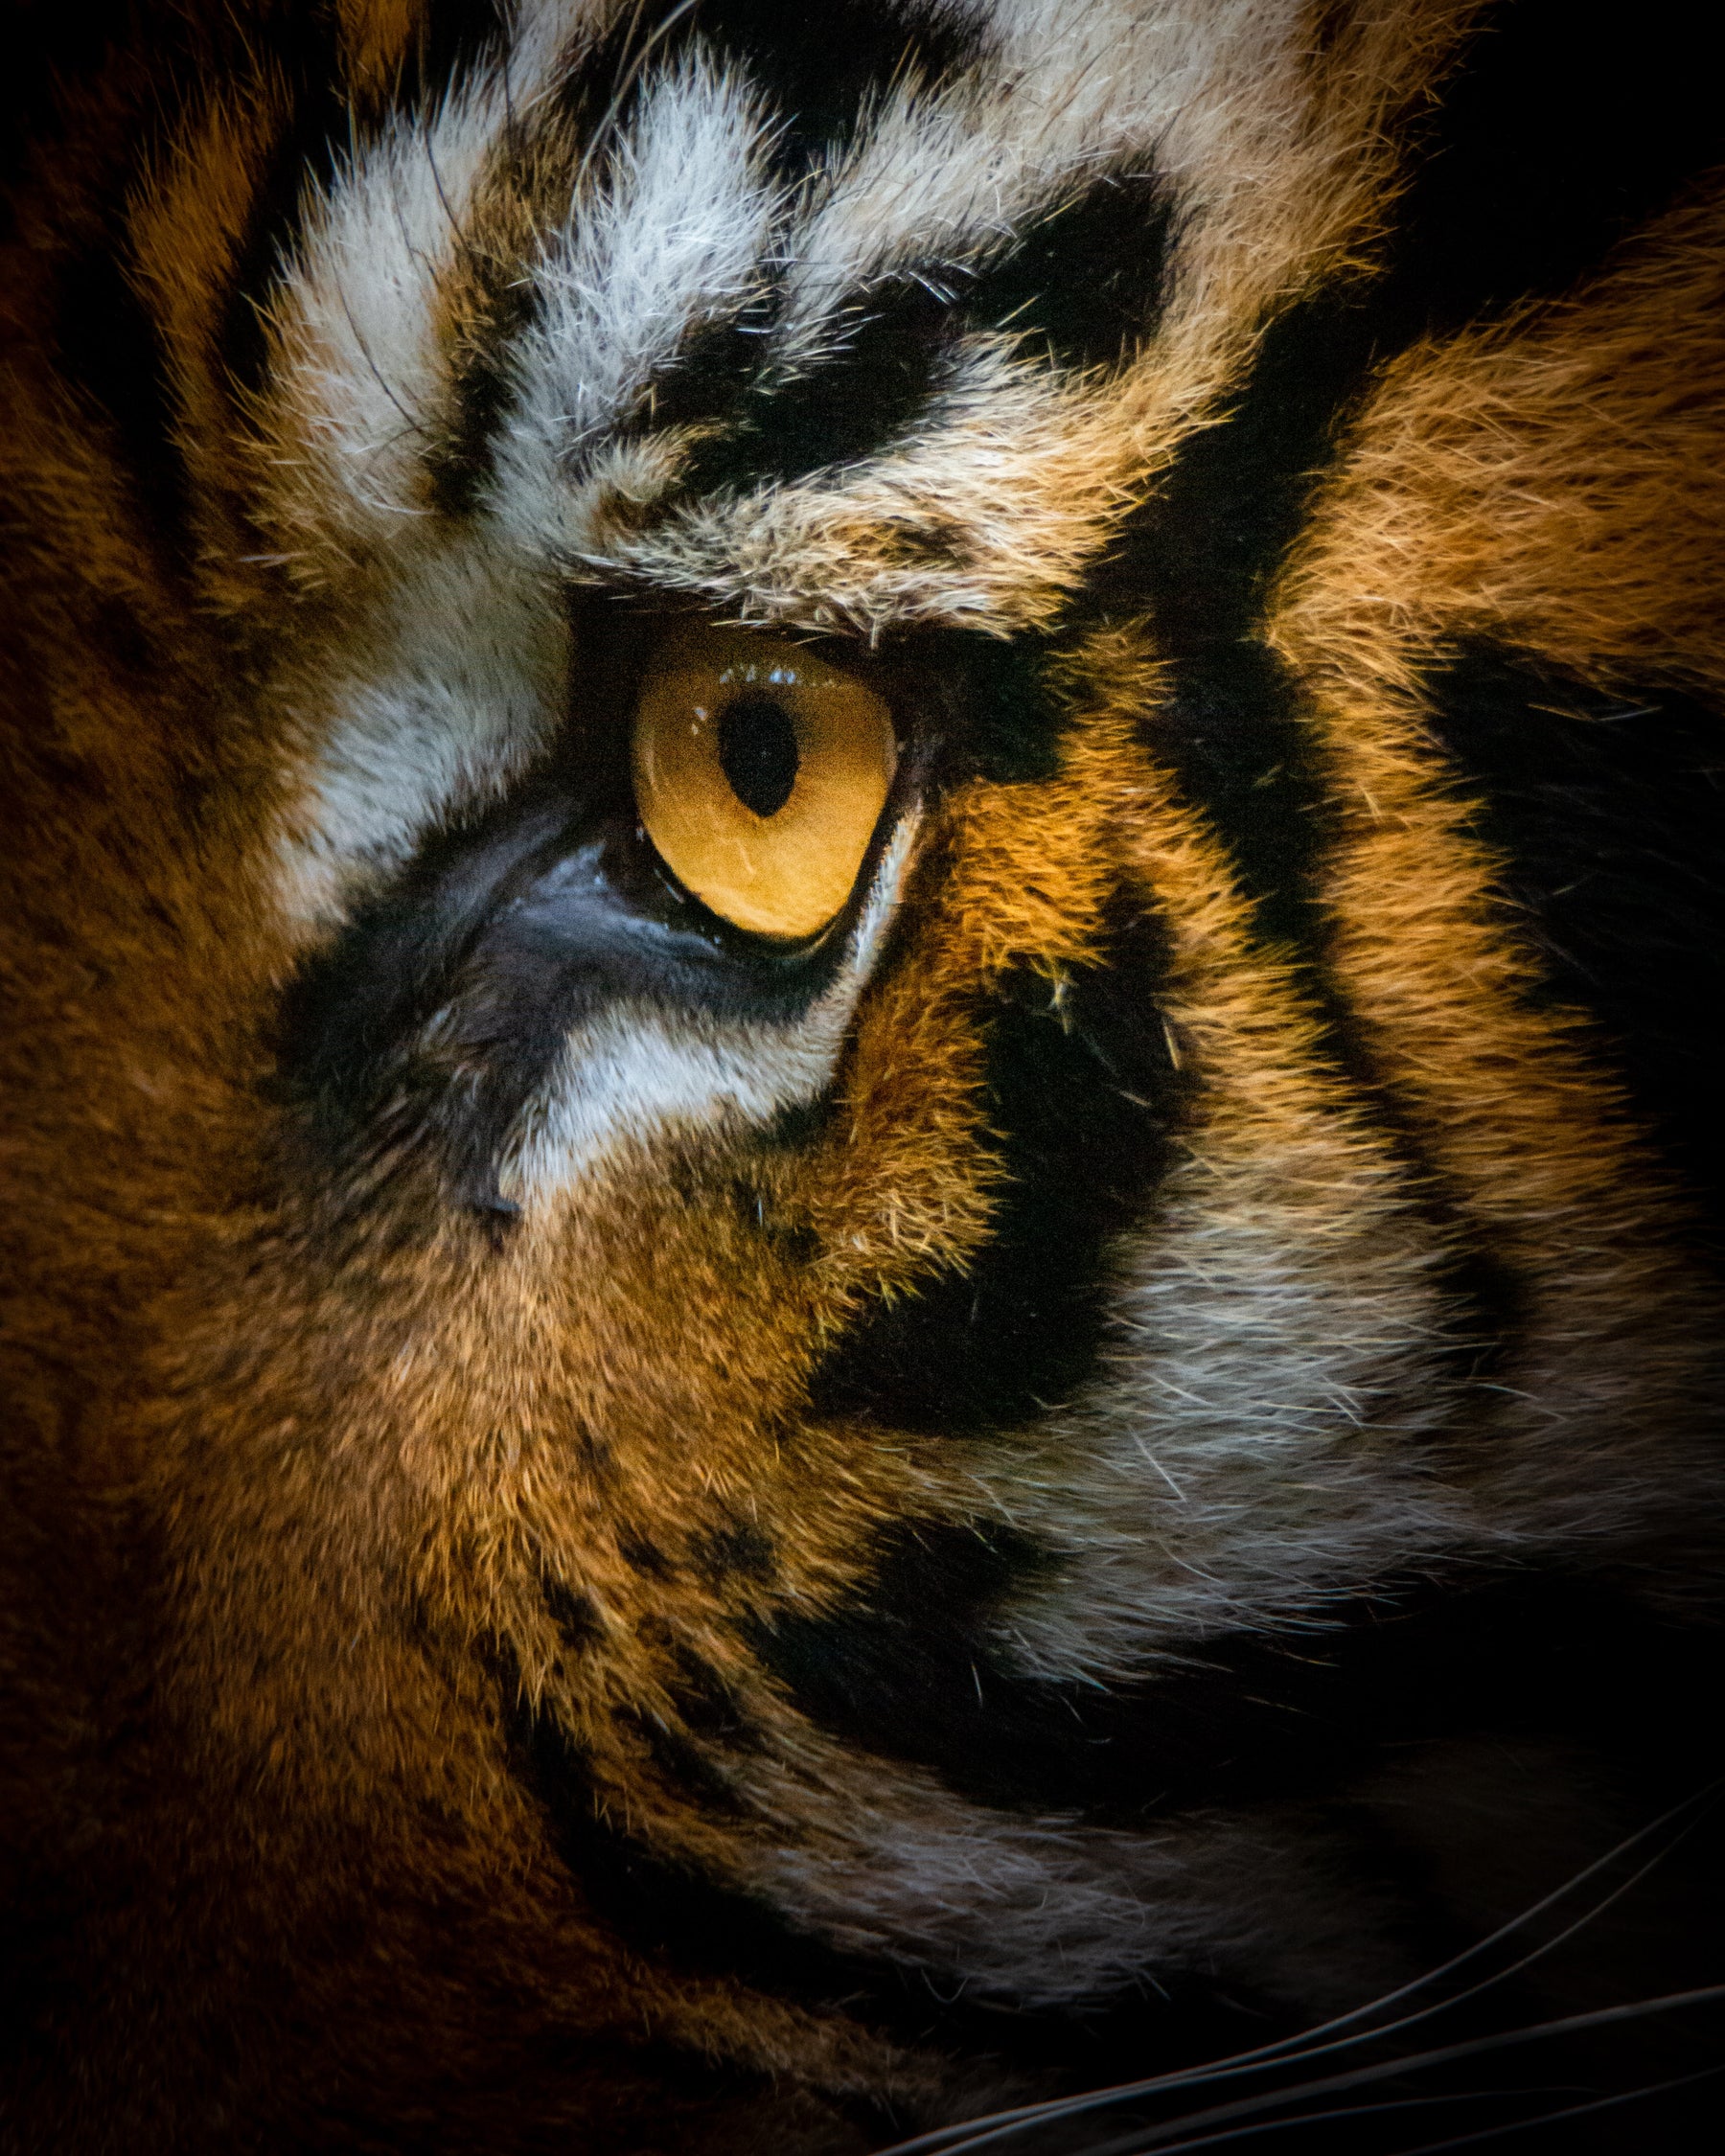 Tiger Eye stock photo ralph mayhew